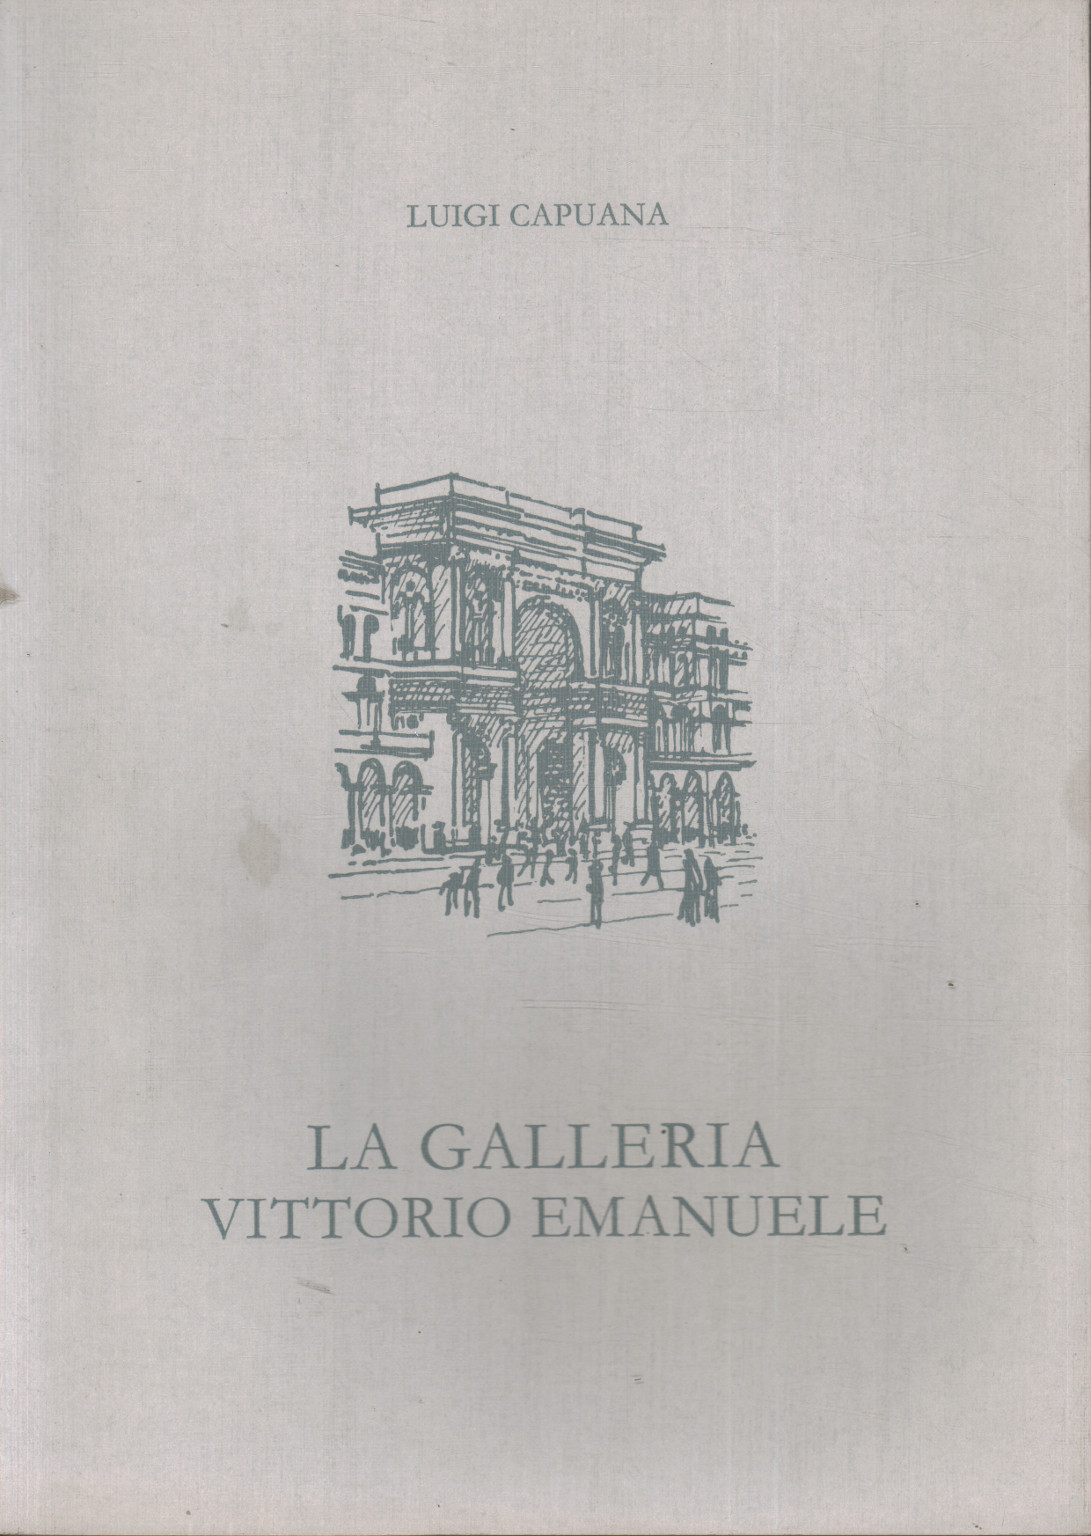 The Vittorio Emanuele gallery